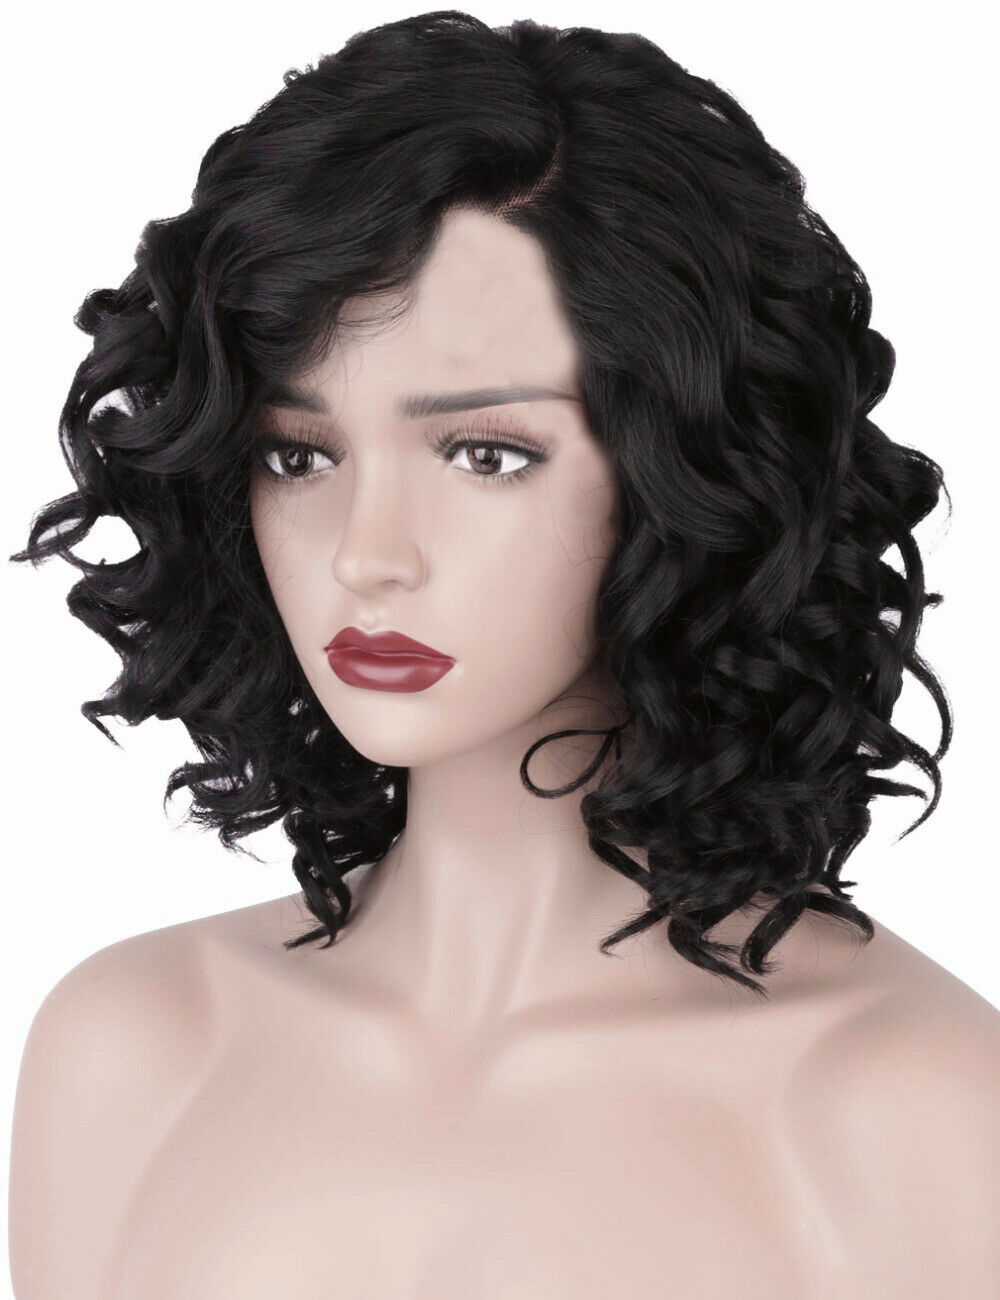 Short Wavy Full Wigs Lady Women's Curly Synthetic Hair Wigs Heat Resistant Wigs